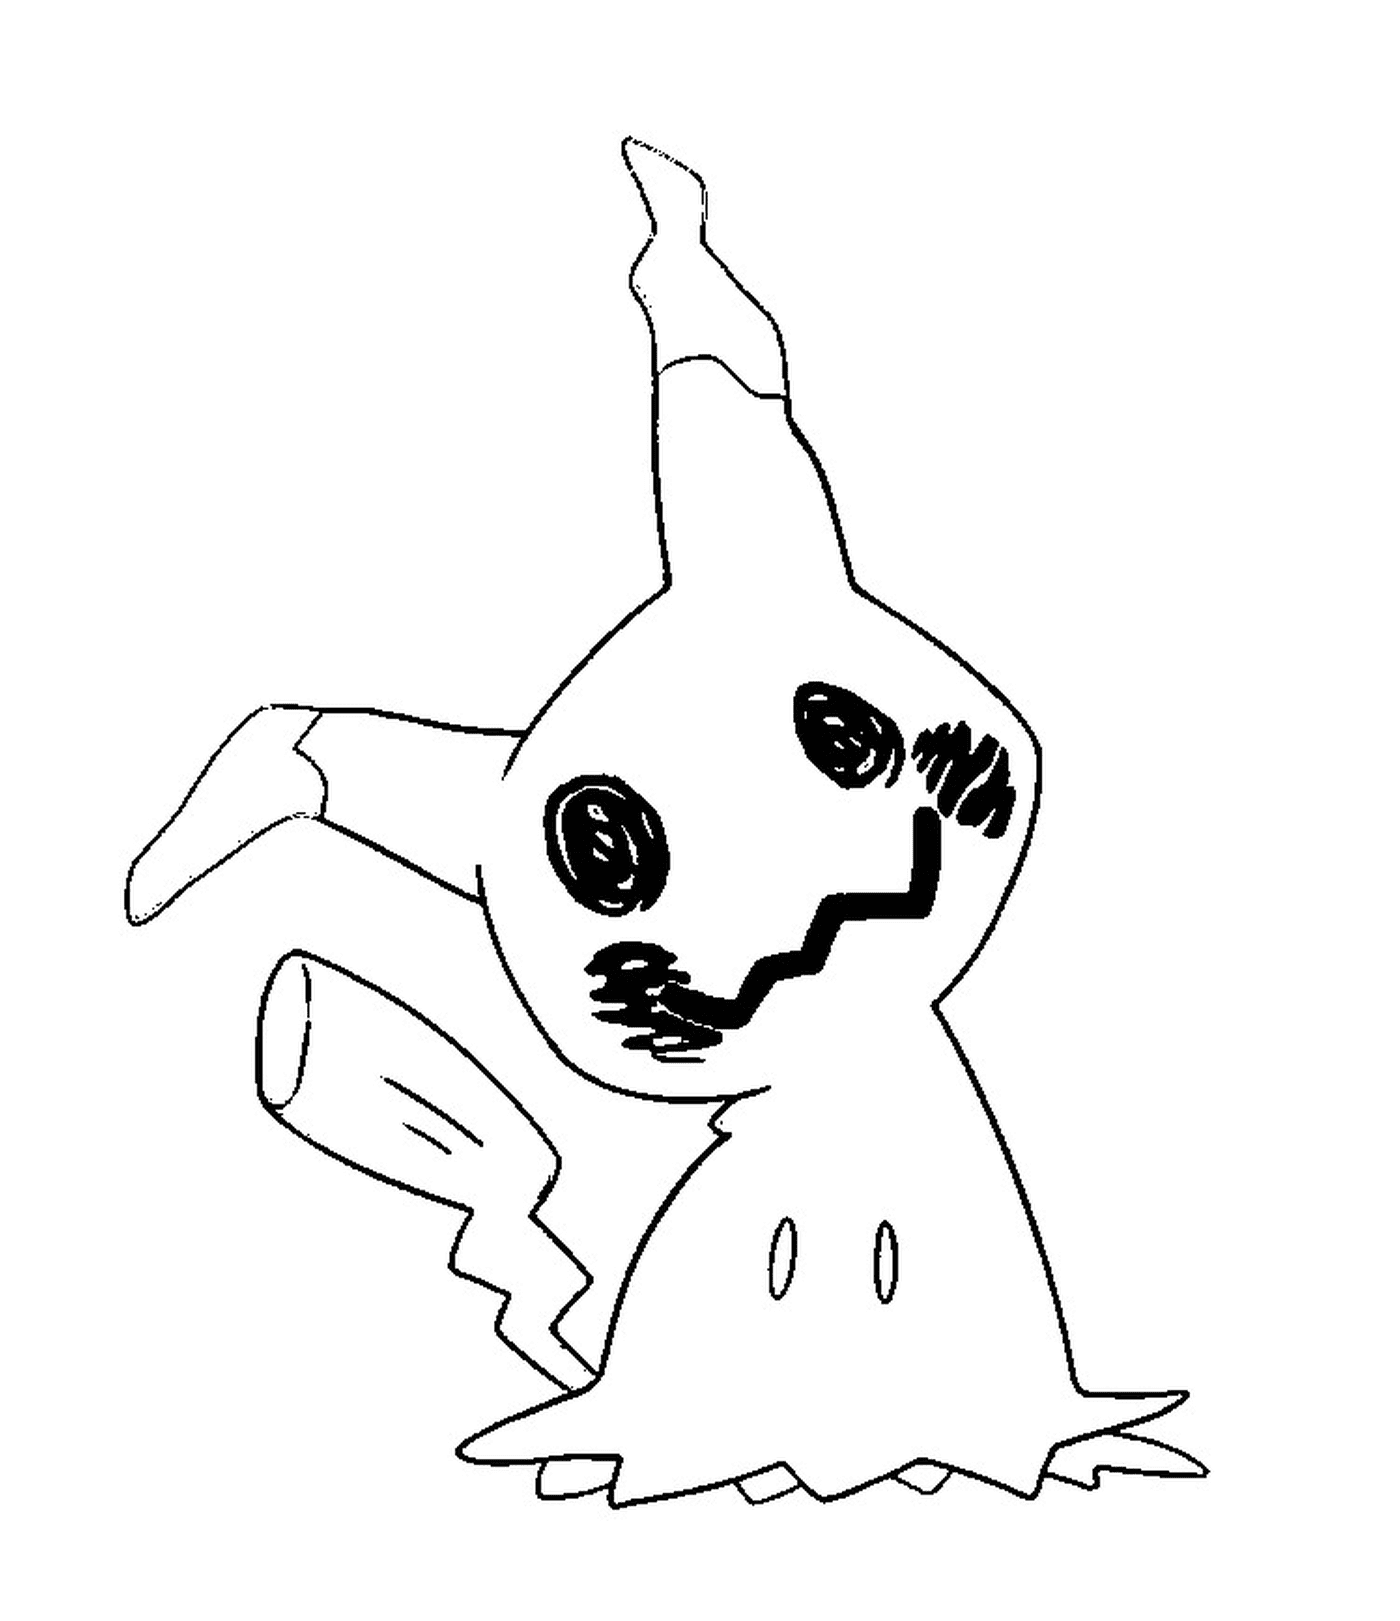   Mimiqui, un Pikachu 